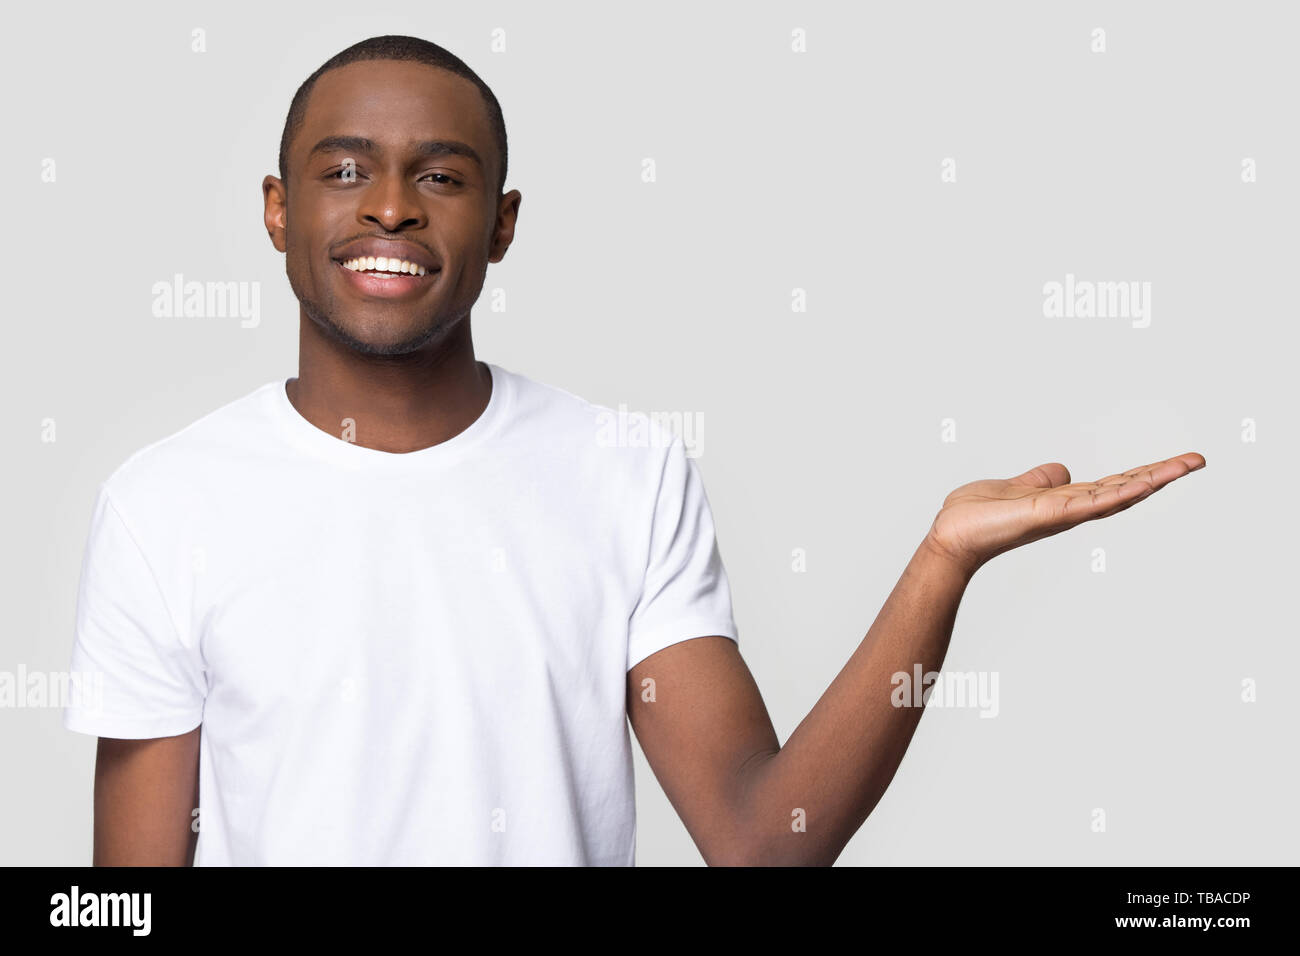 Headshot portrait african male advertise product studio shot Stock Photo